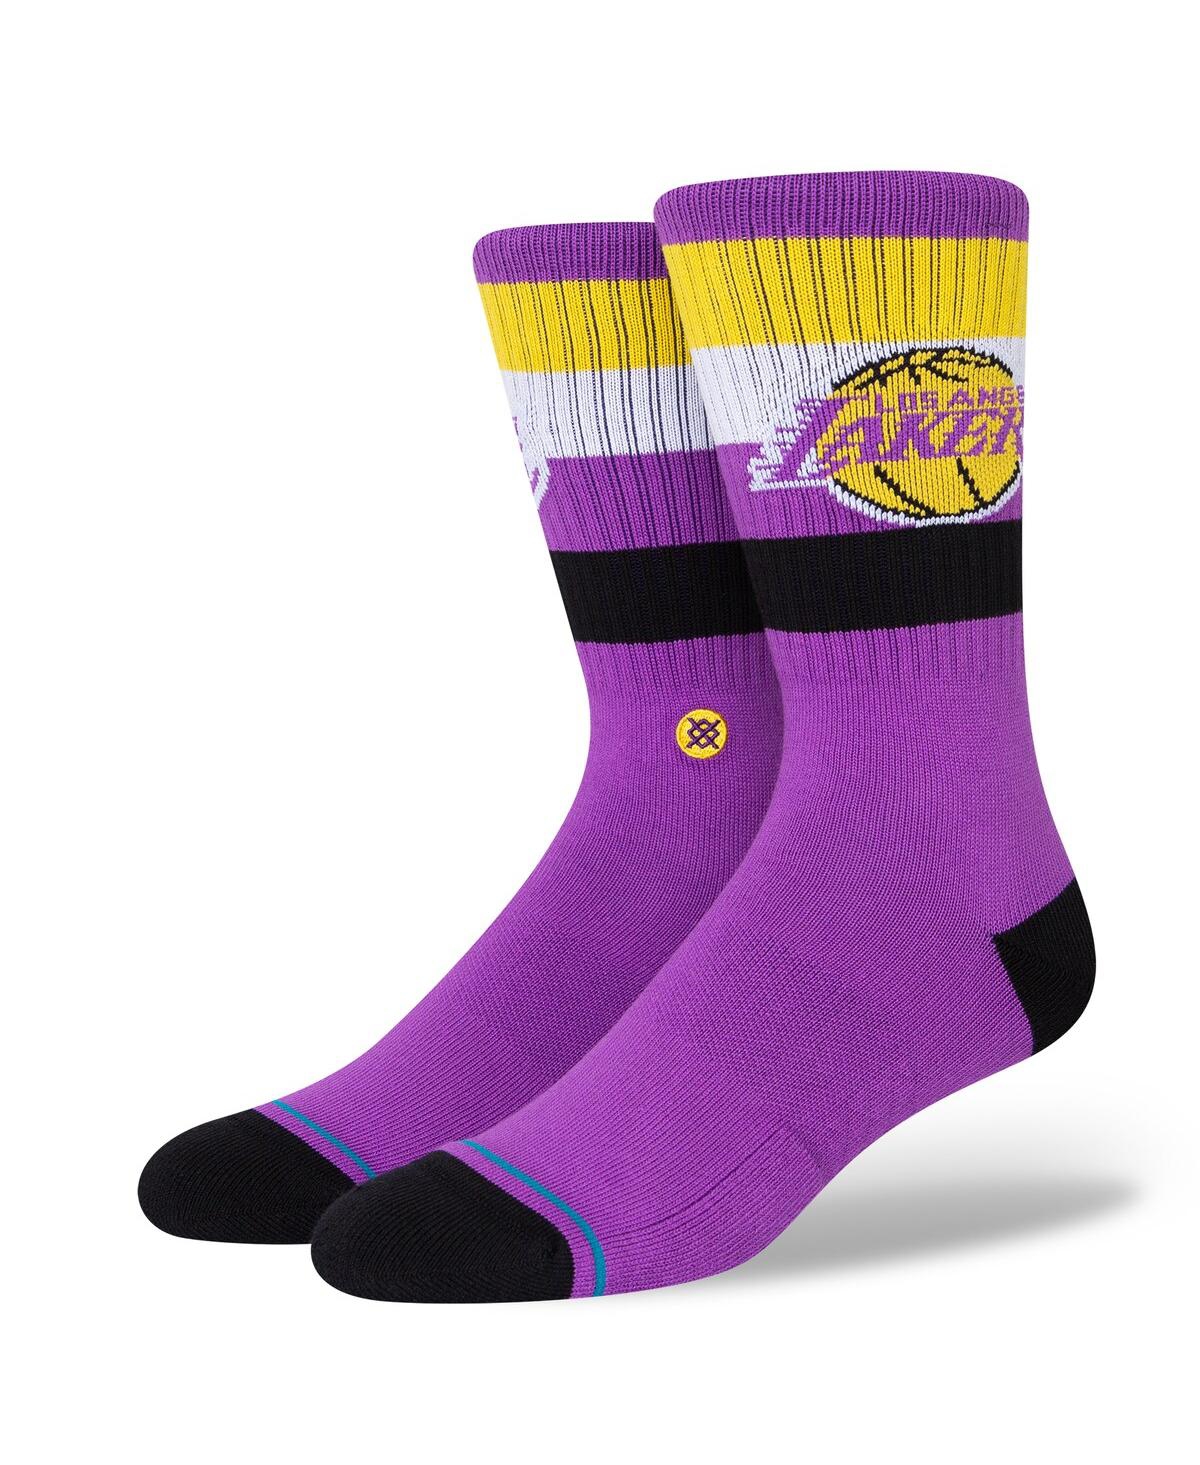 Men's Stance Los Angeles Lakers Stripe Crew Socks - Purple